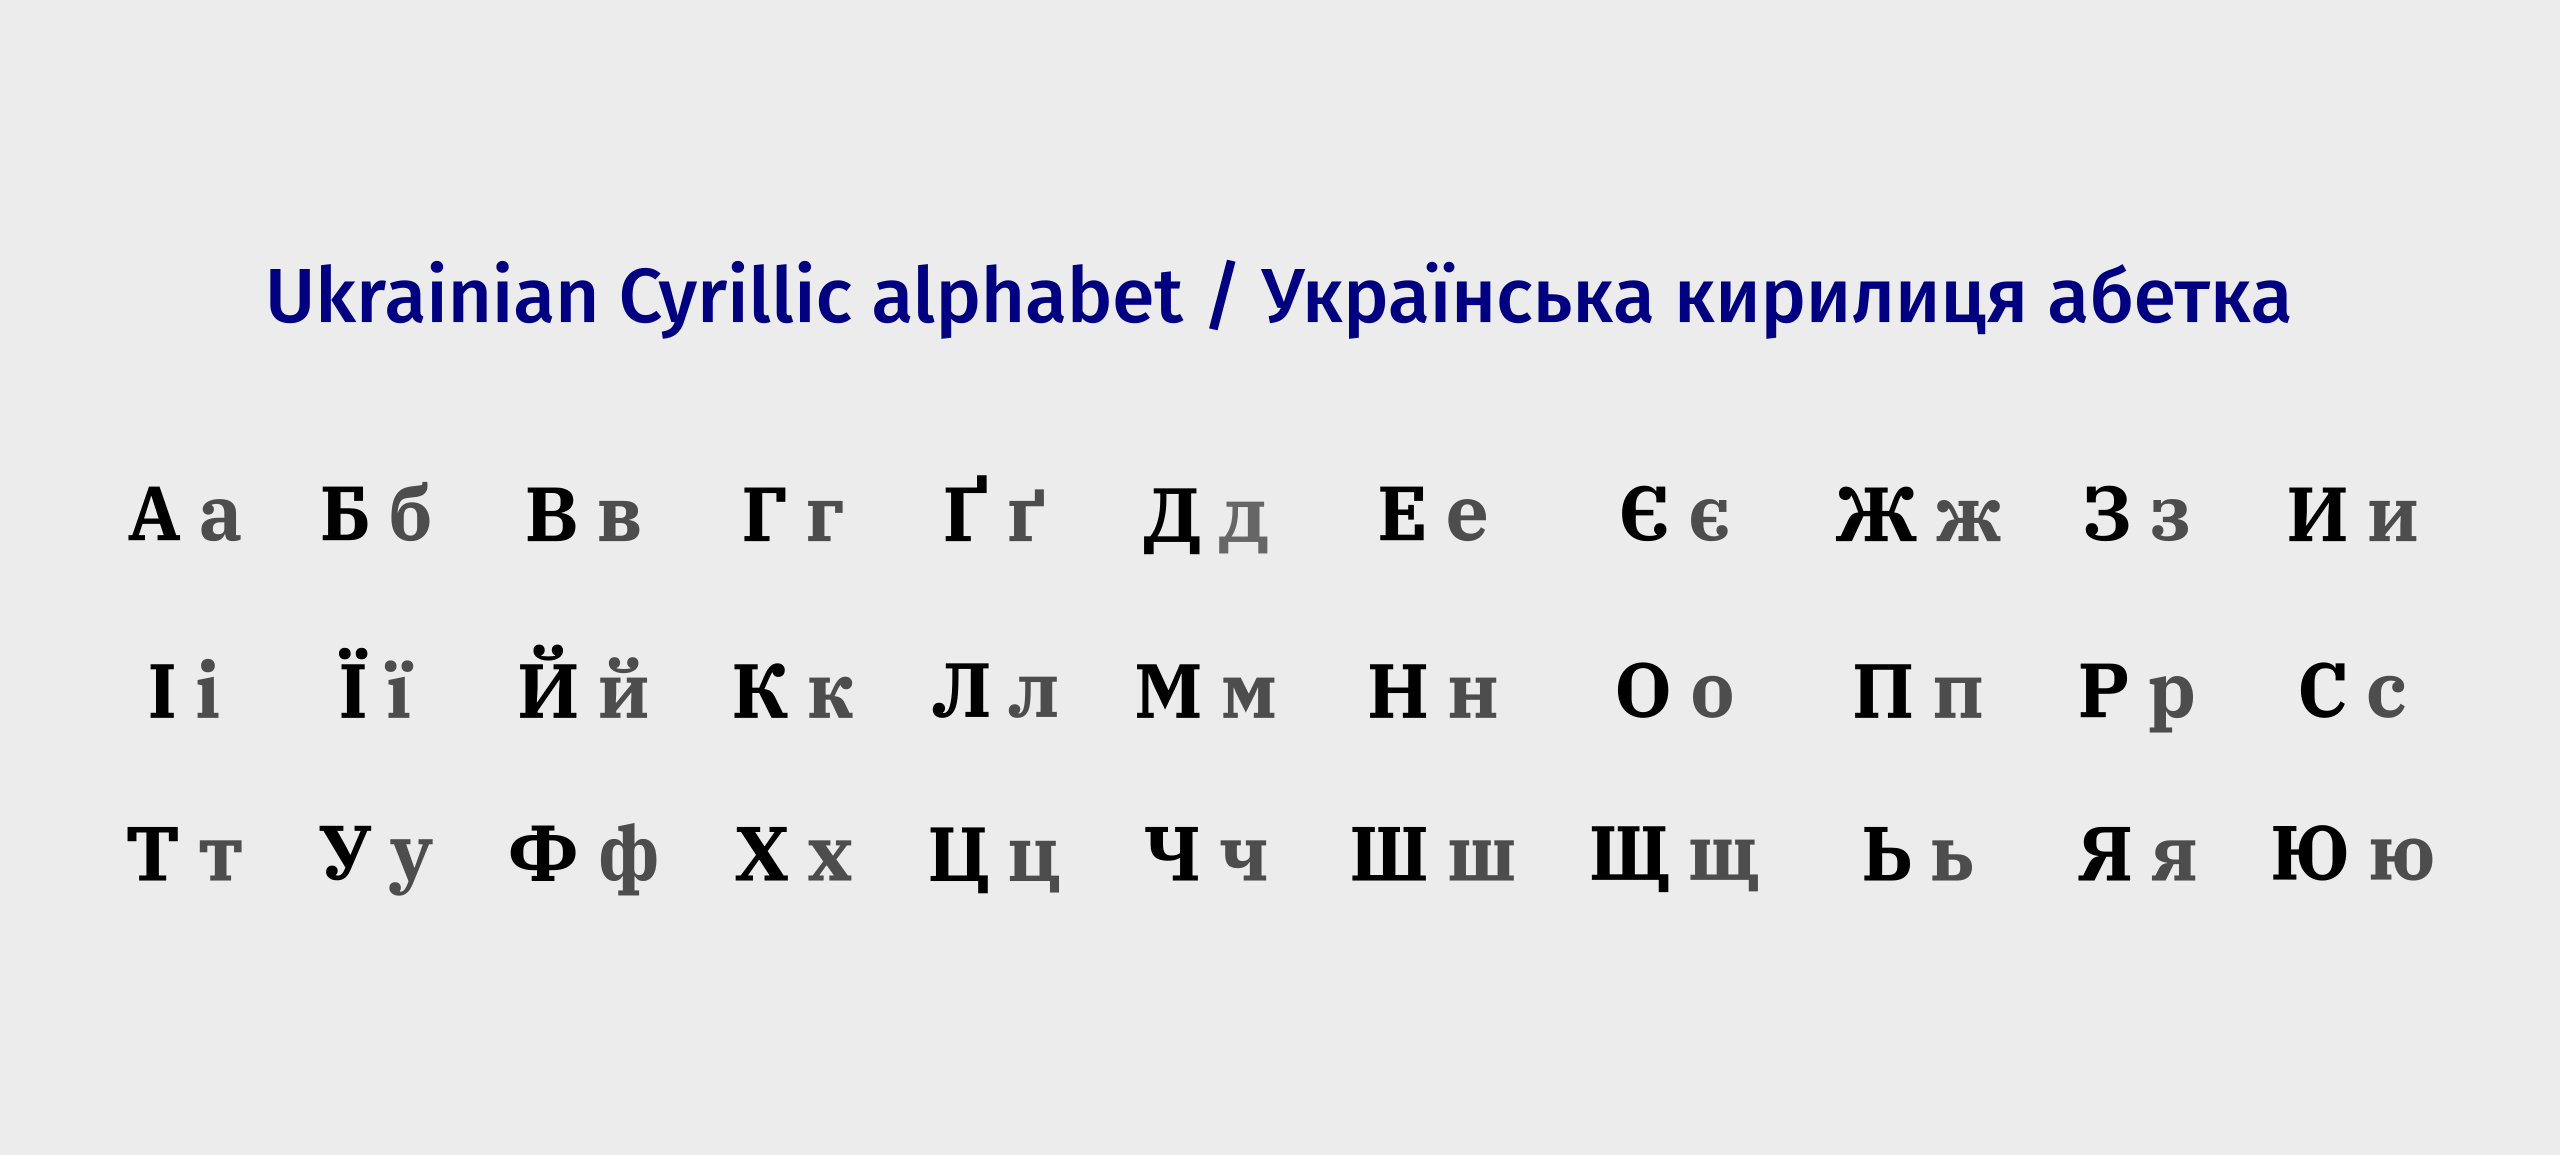 Украинский алфавит. Украинский алфавит буквы. Украинская кириллица. Древний украинский алфавит.